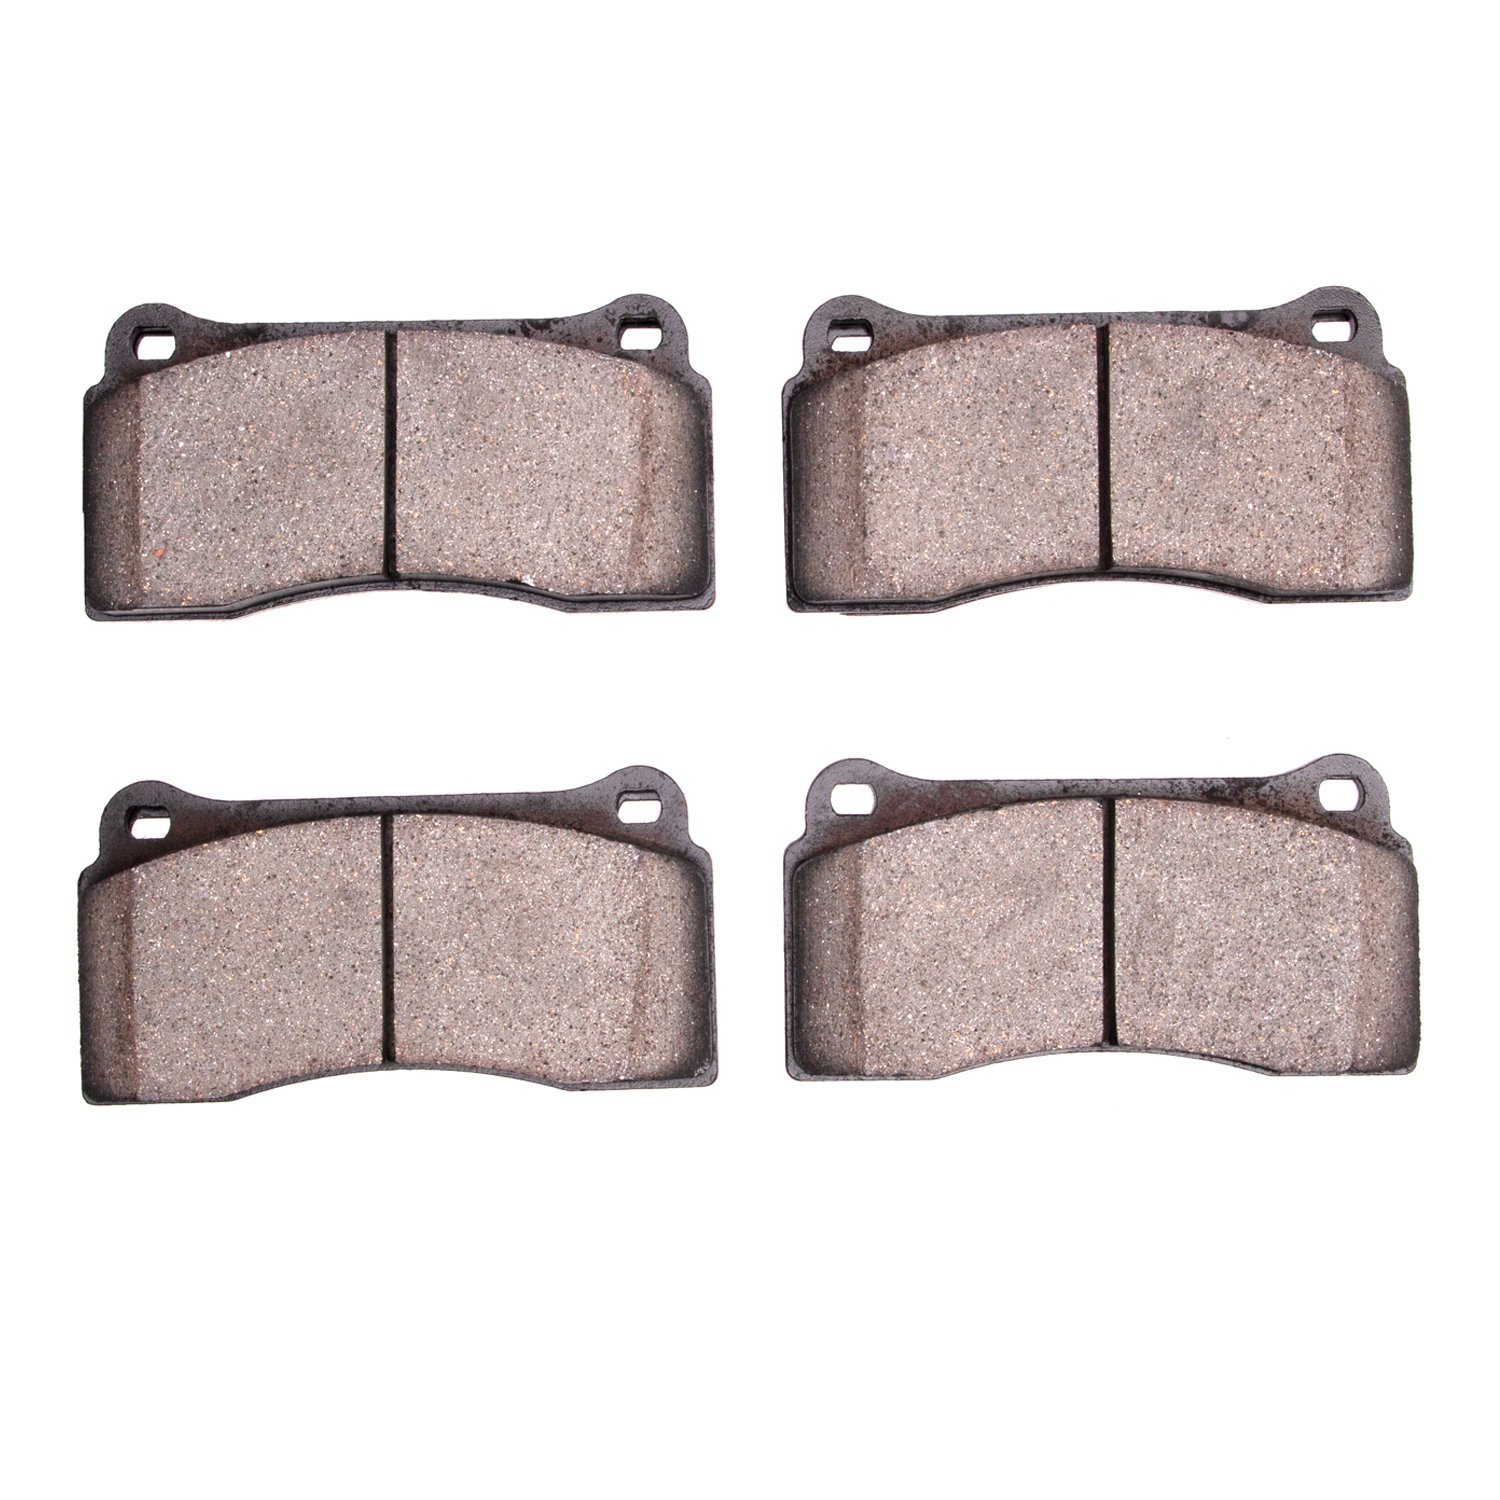 Semi-Metallic Brake Pads, 1990-2006 Fits Multiple Makes/Models, Position: Front & Rear